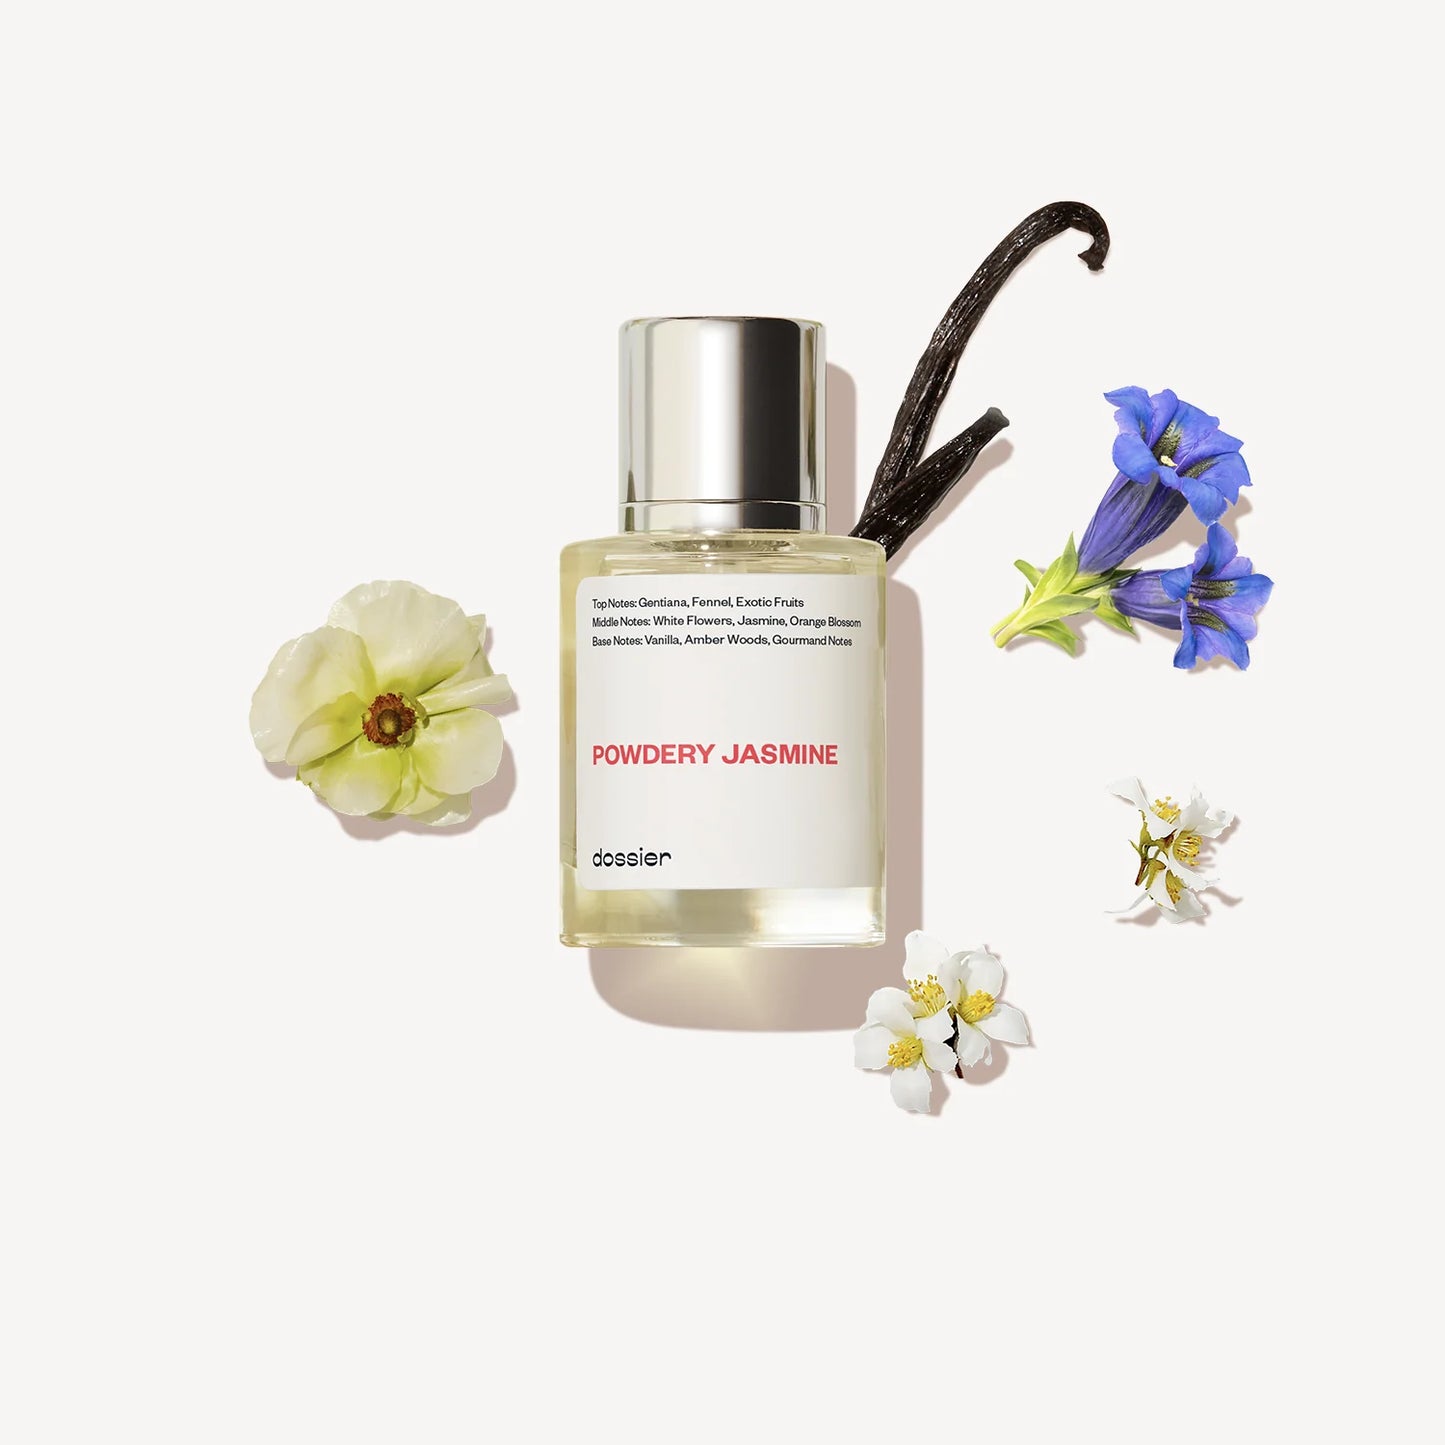 Dossier Powdery Jasmine Eau de Parfum Inspired by Viktor&Rolf's Good Fortune 50 ml